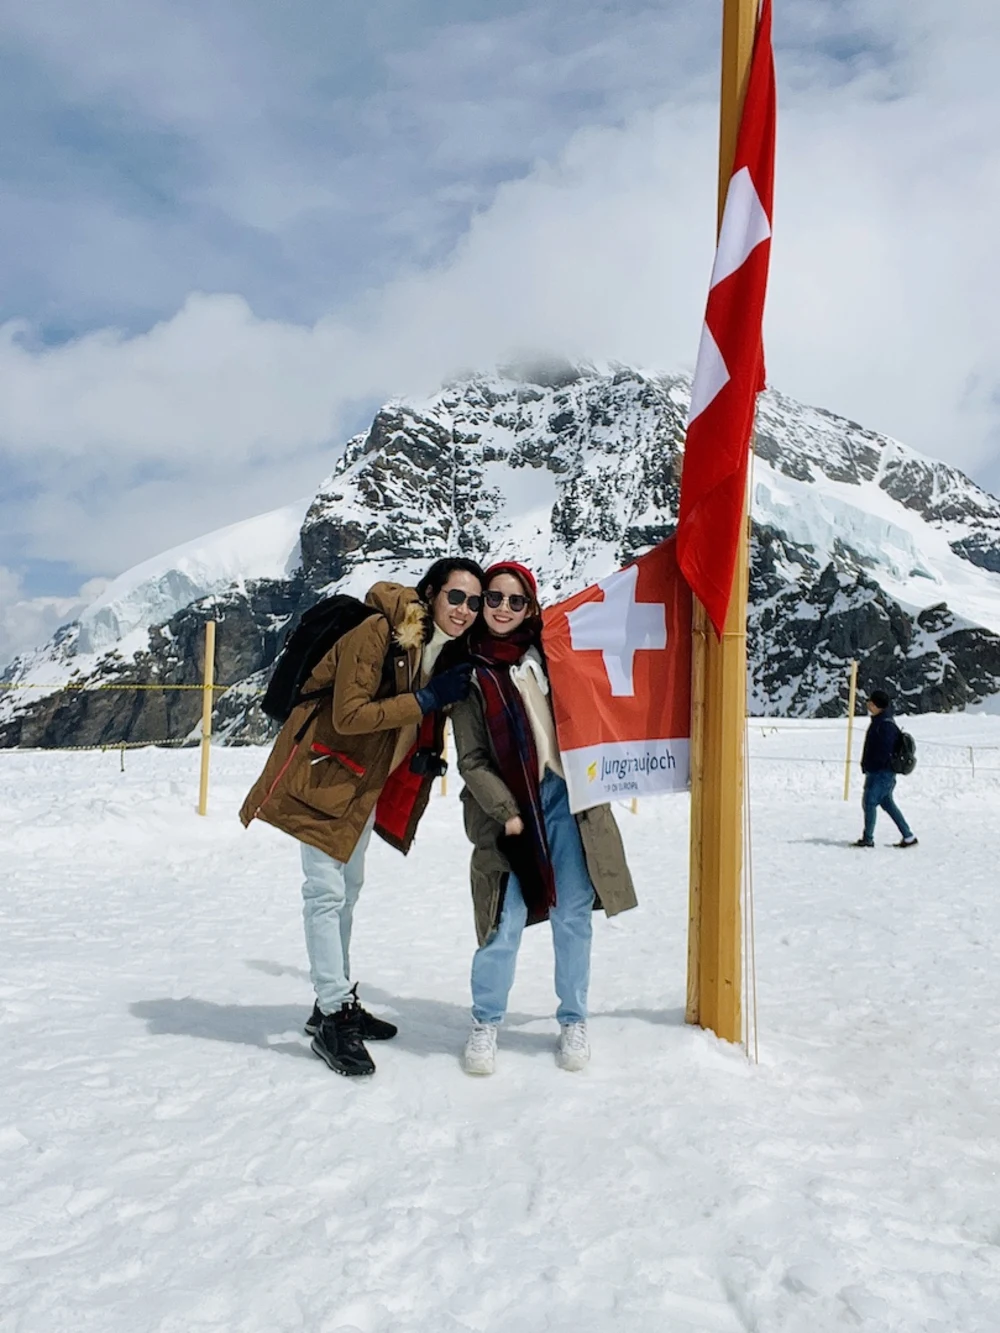 Jungfraujoch best place to visit in Switzerland